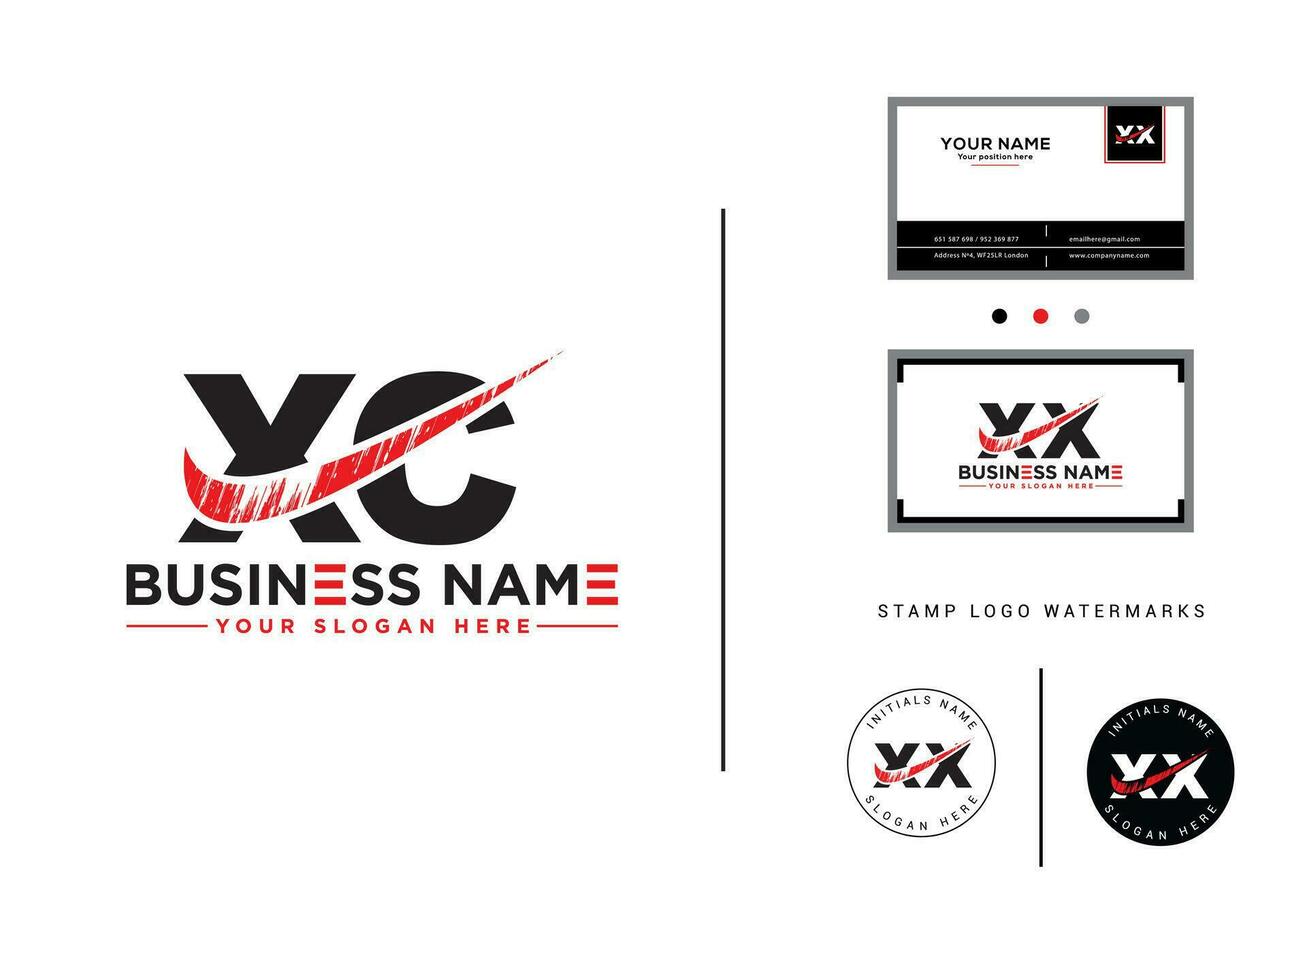 escritura xc logo icono negocio tarjeta, alfabeto xc cepillo letra logo para tienda vector